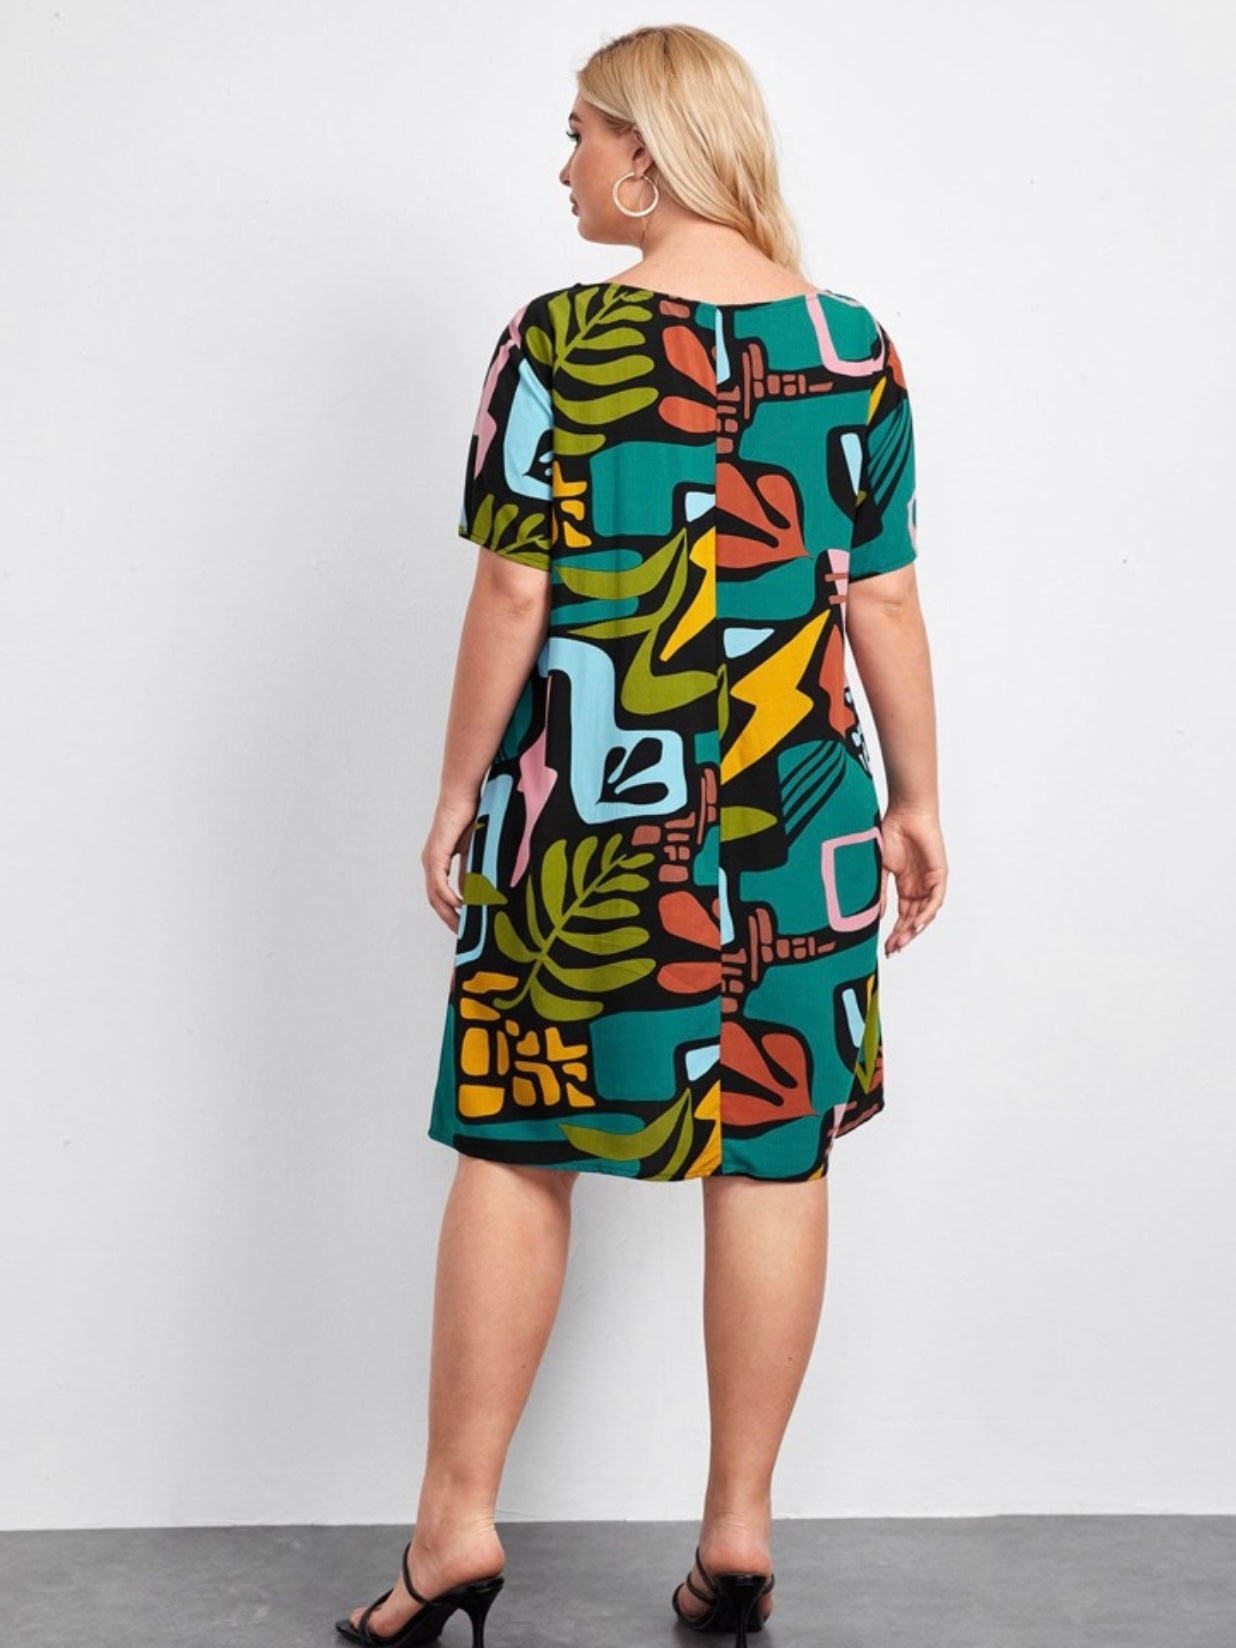 Geometric Fun Print Plus Size Dress